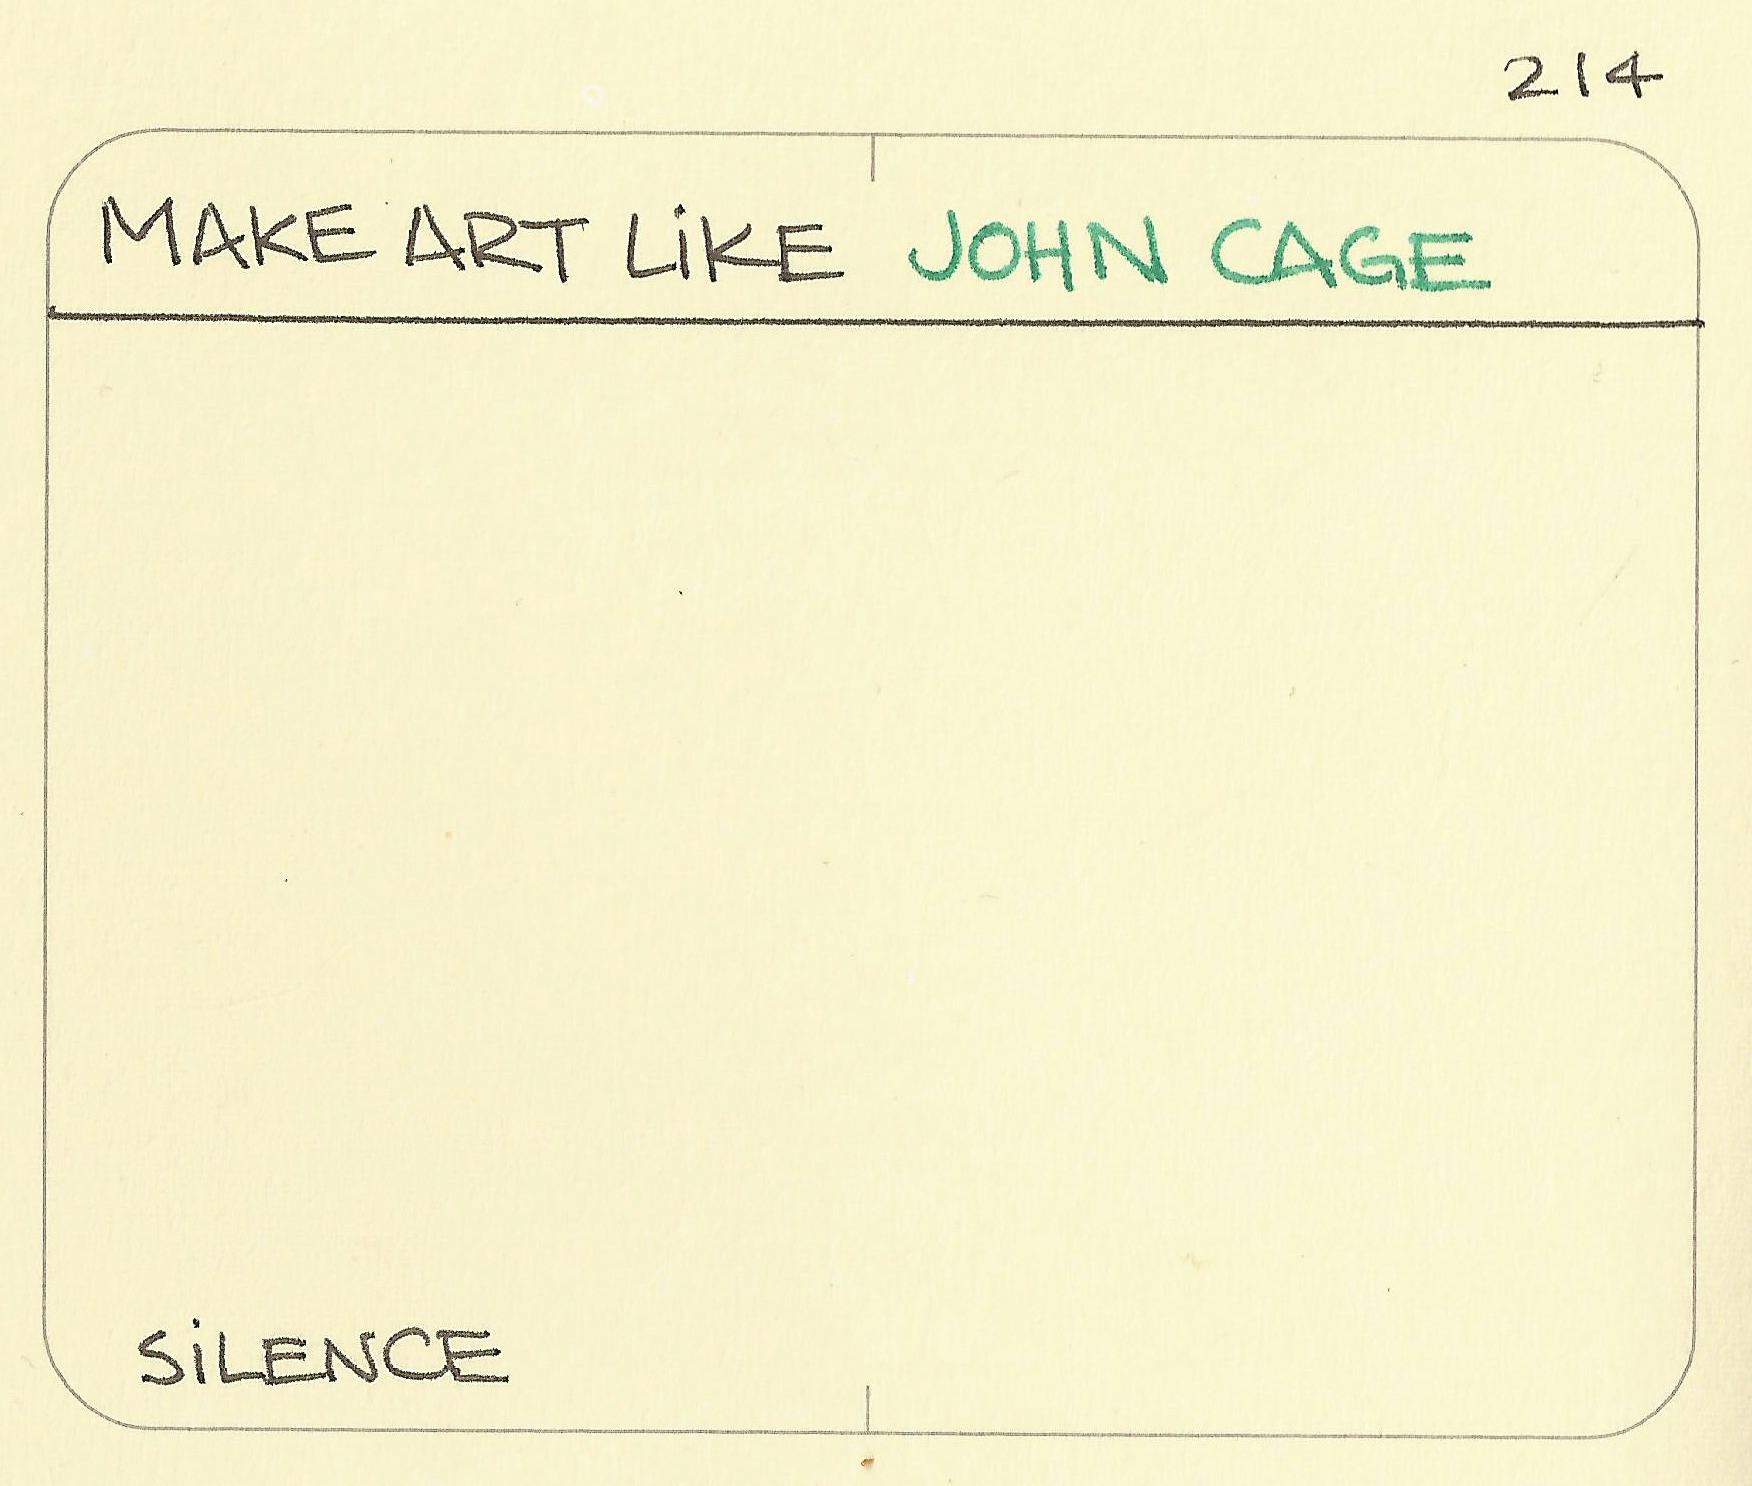 Make art like John Cage - Sketchplanations